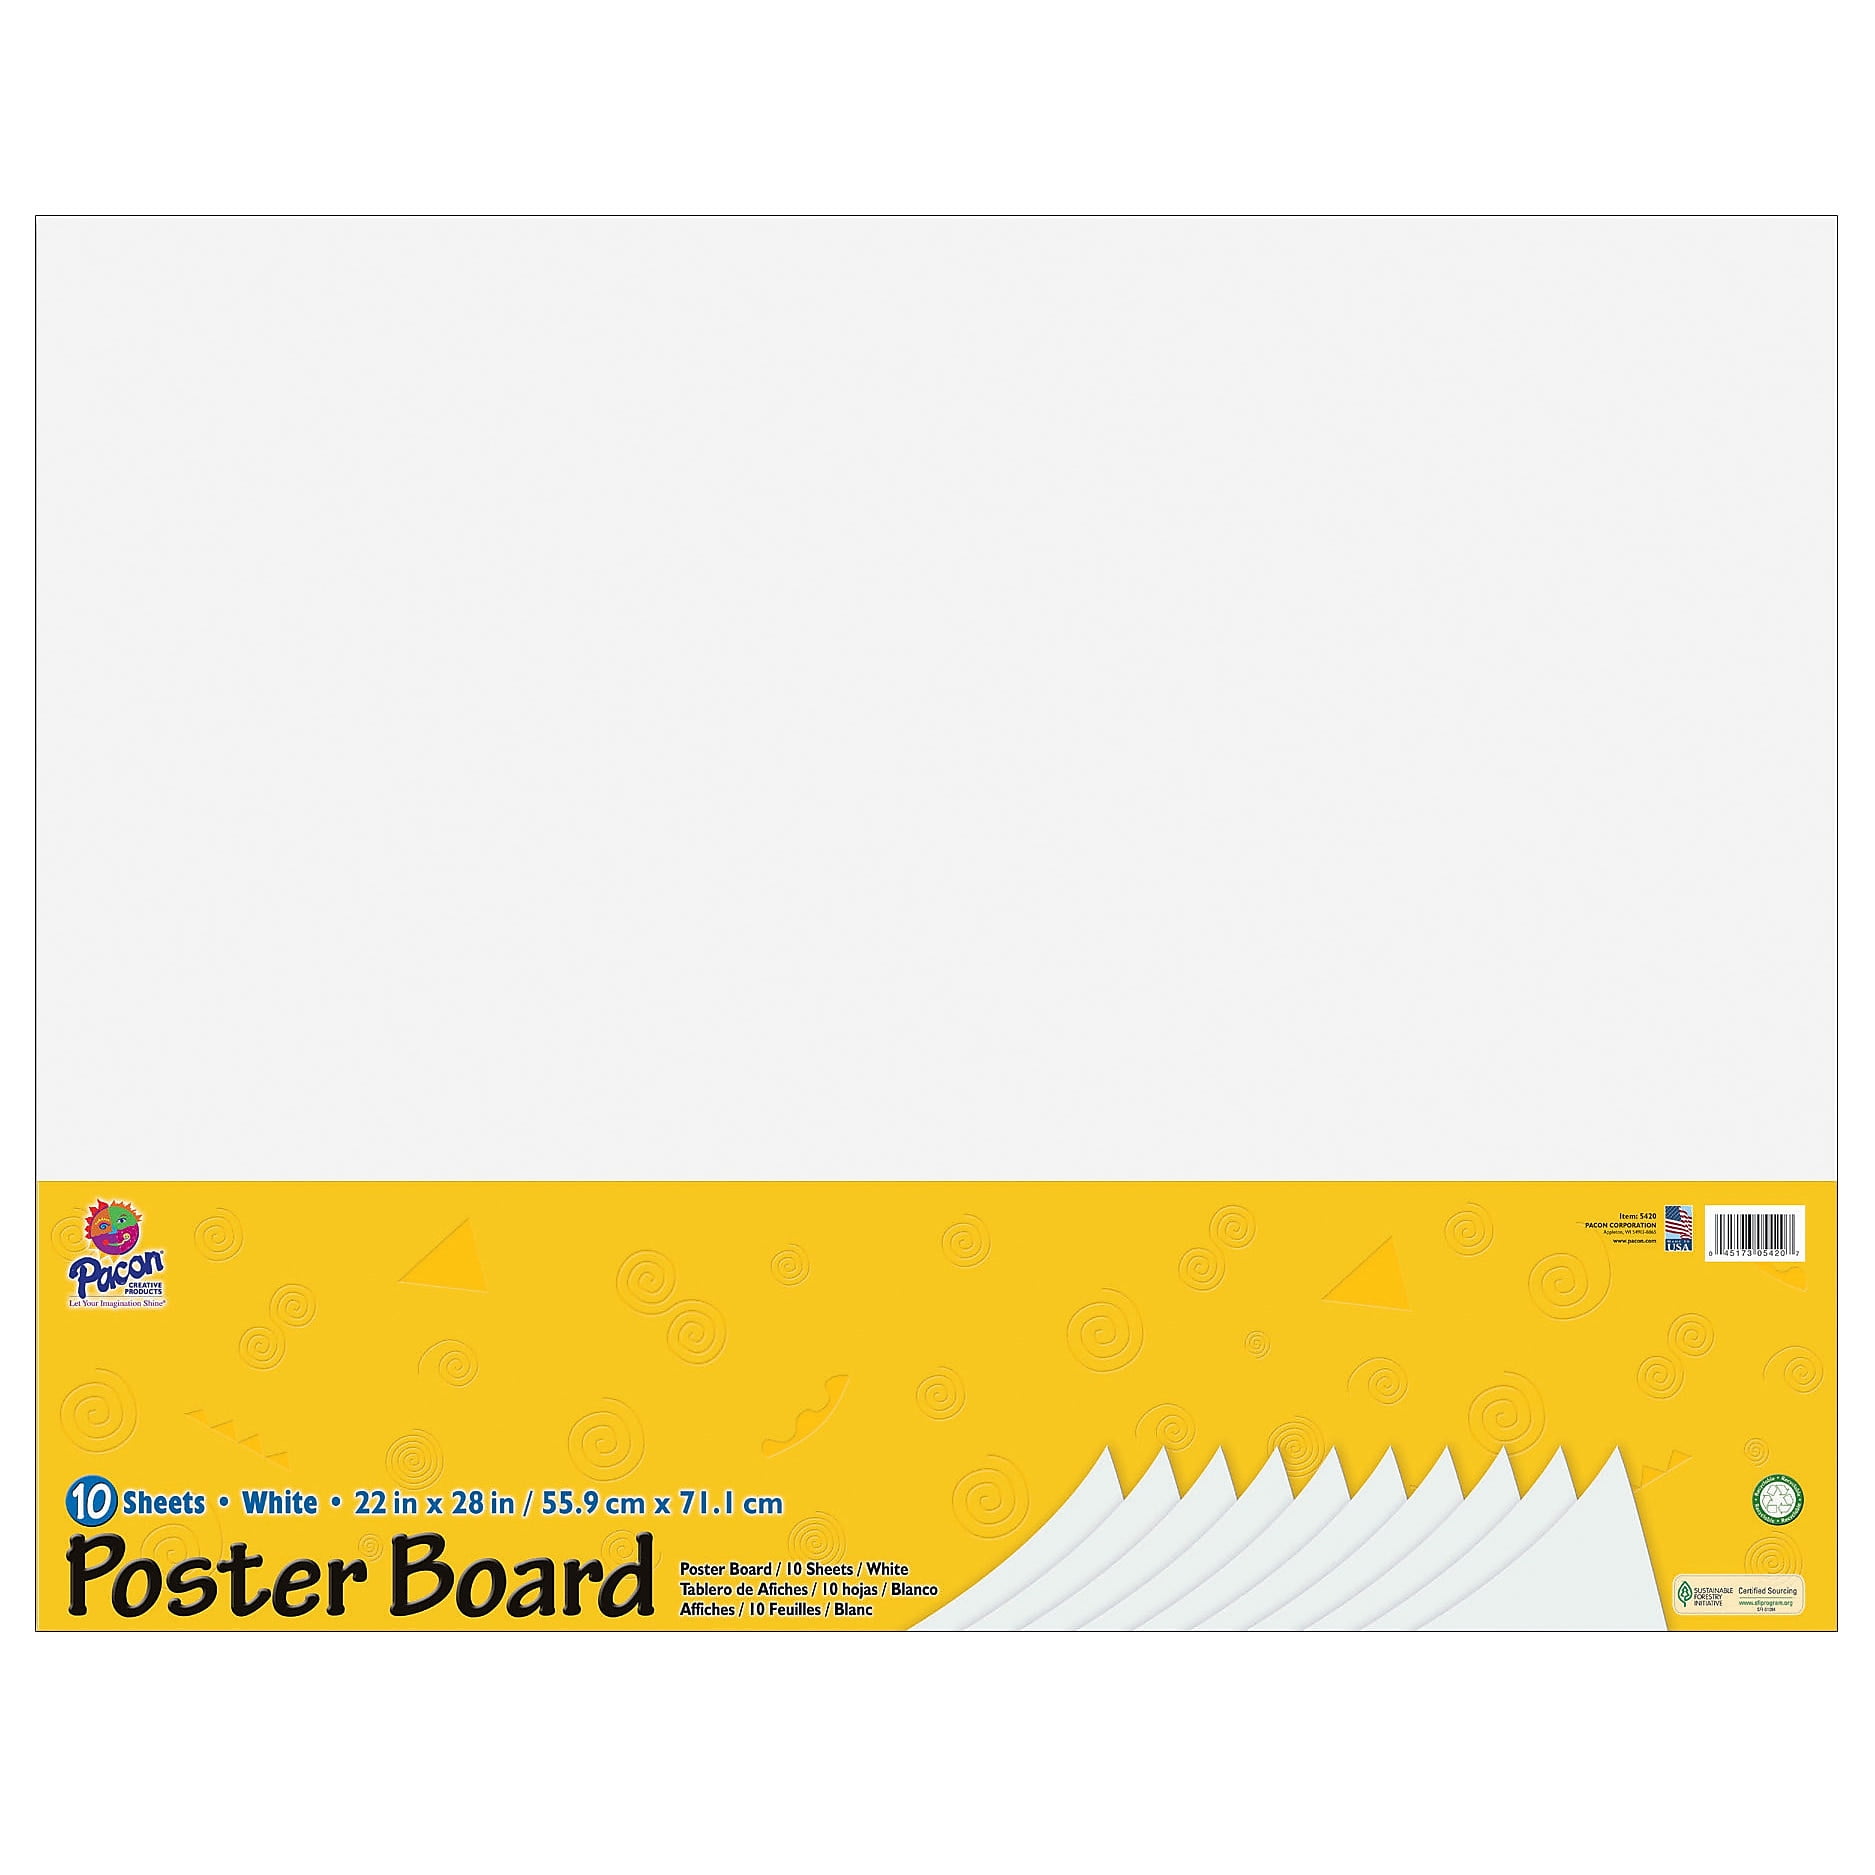 Tri-Fold Presentation Board - Pacon Creative Products